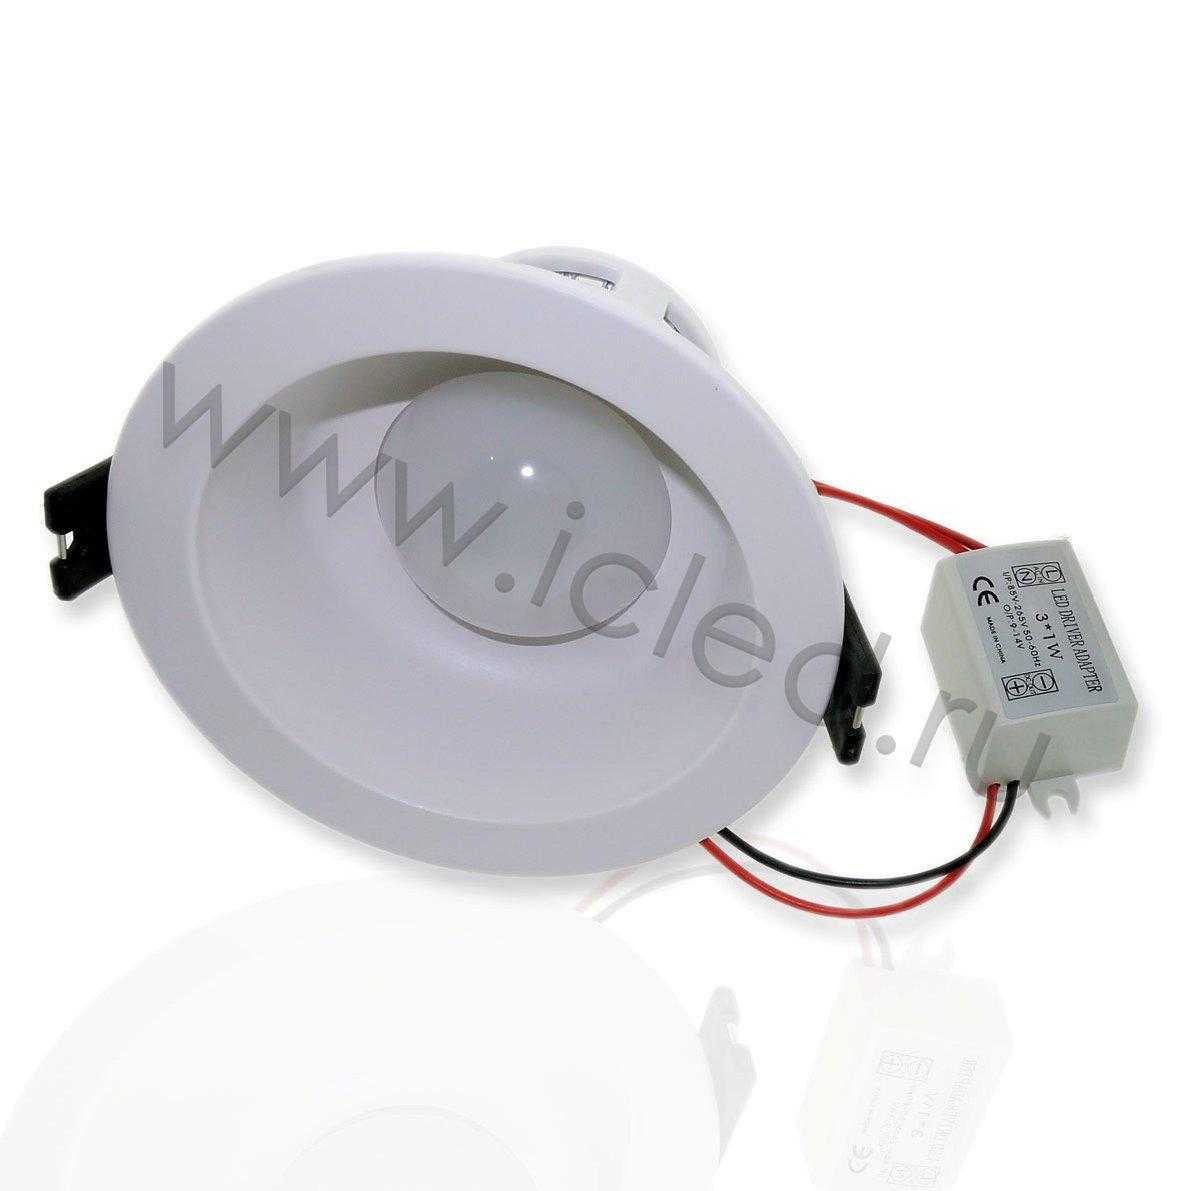 Светодиодные светильники Светодиодный светильник точечный RW полусфера (3W, Warm White)